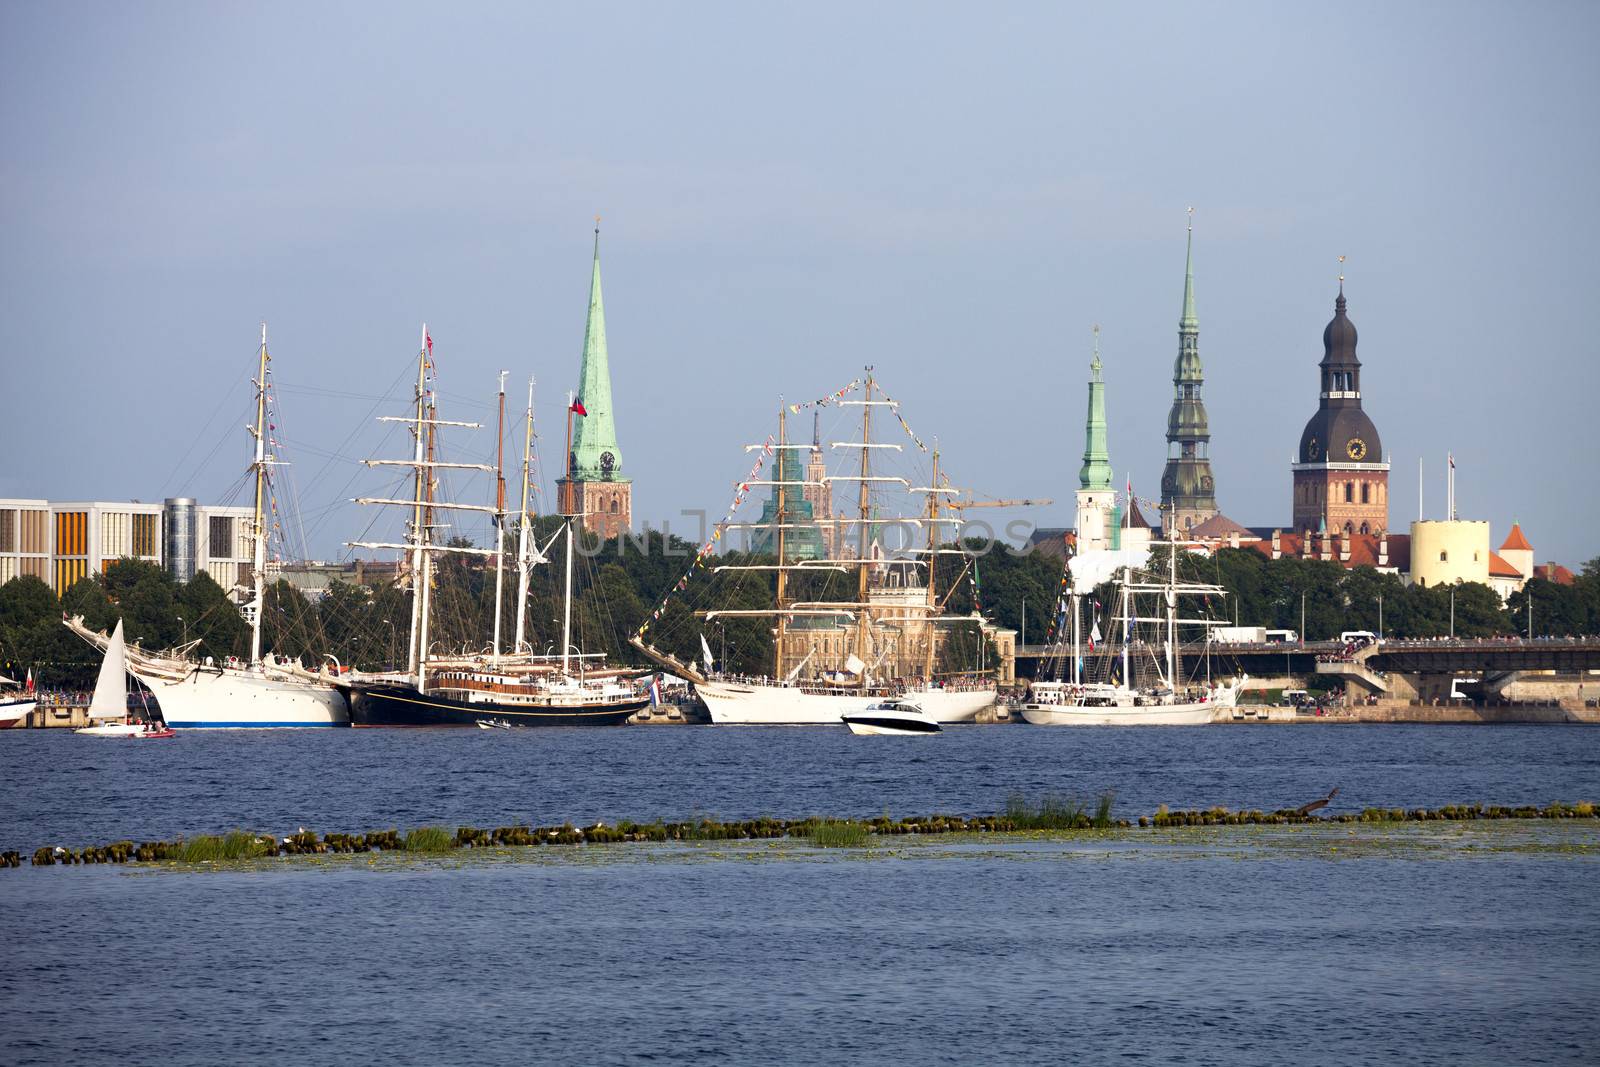 RIGA, LATVIA - JULY 26: The tall ships races ships in port with traditional Riga skyline in background July 26, 2013 Riga, Latvia.